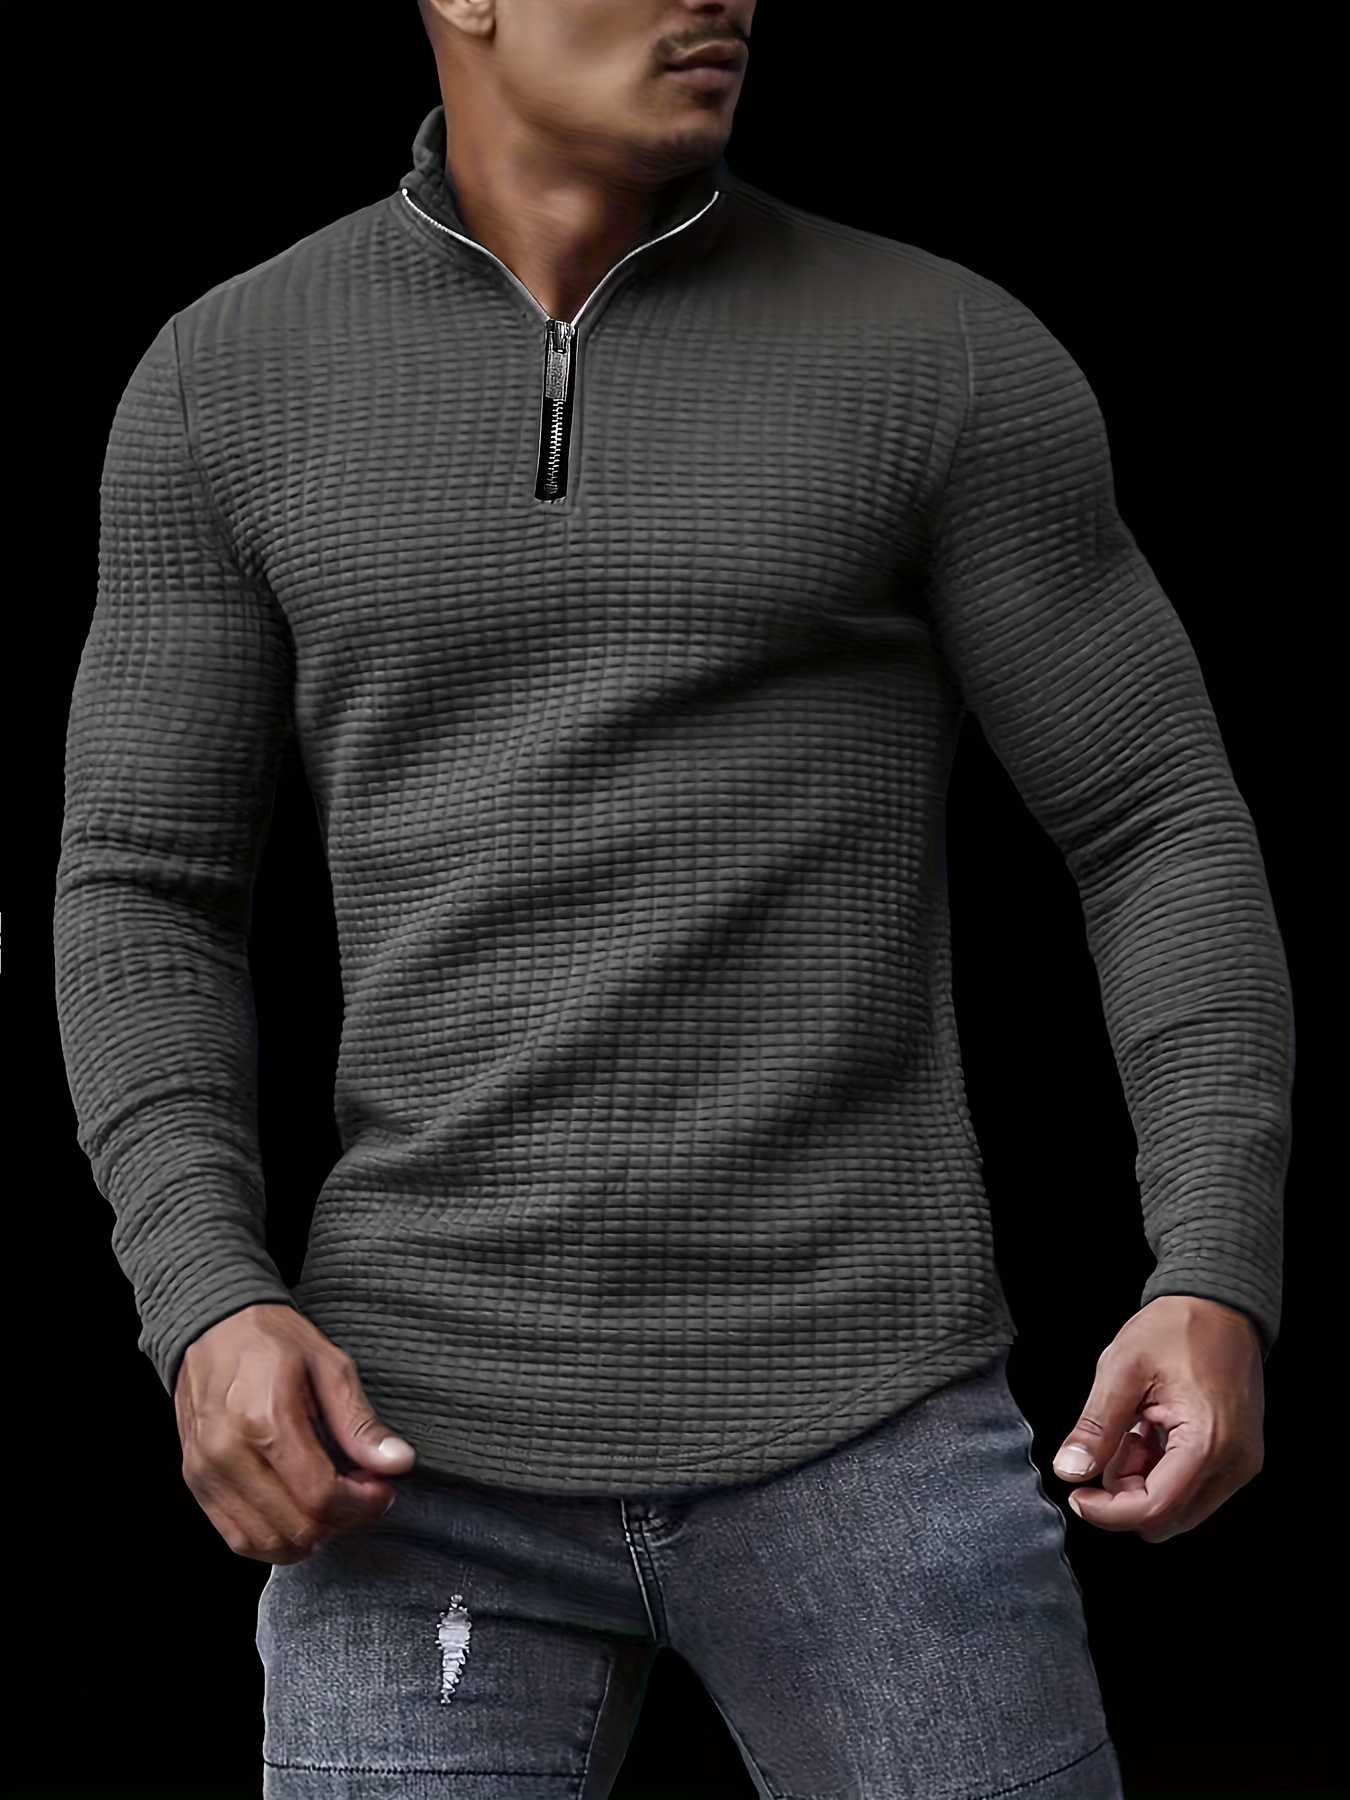  Men Clothing Autumn and Winter Men's Jacquard Knit Jacket Lapel  Long Sleeve Jacket Sweater Black M : Clothing, Shoes & Jewelry